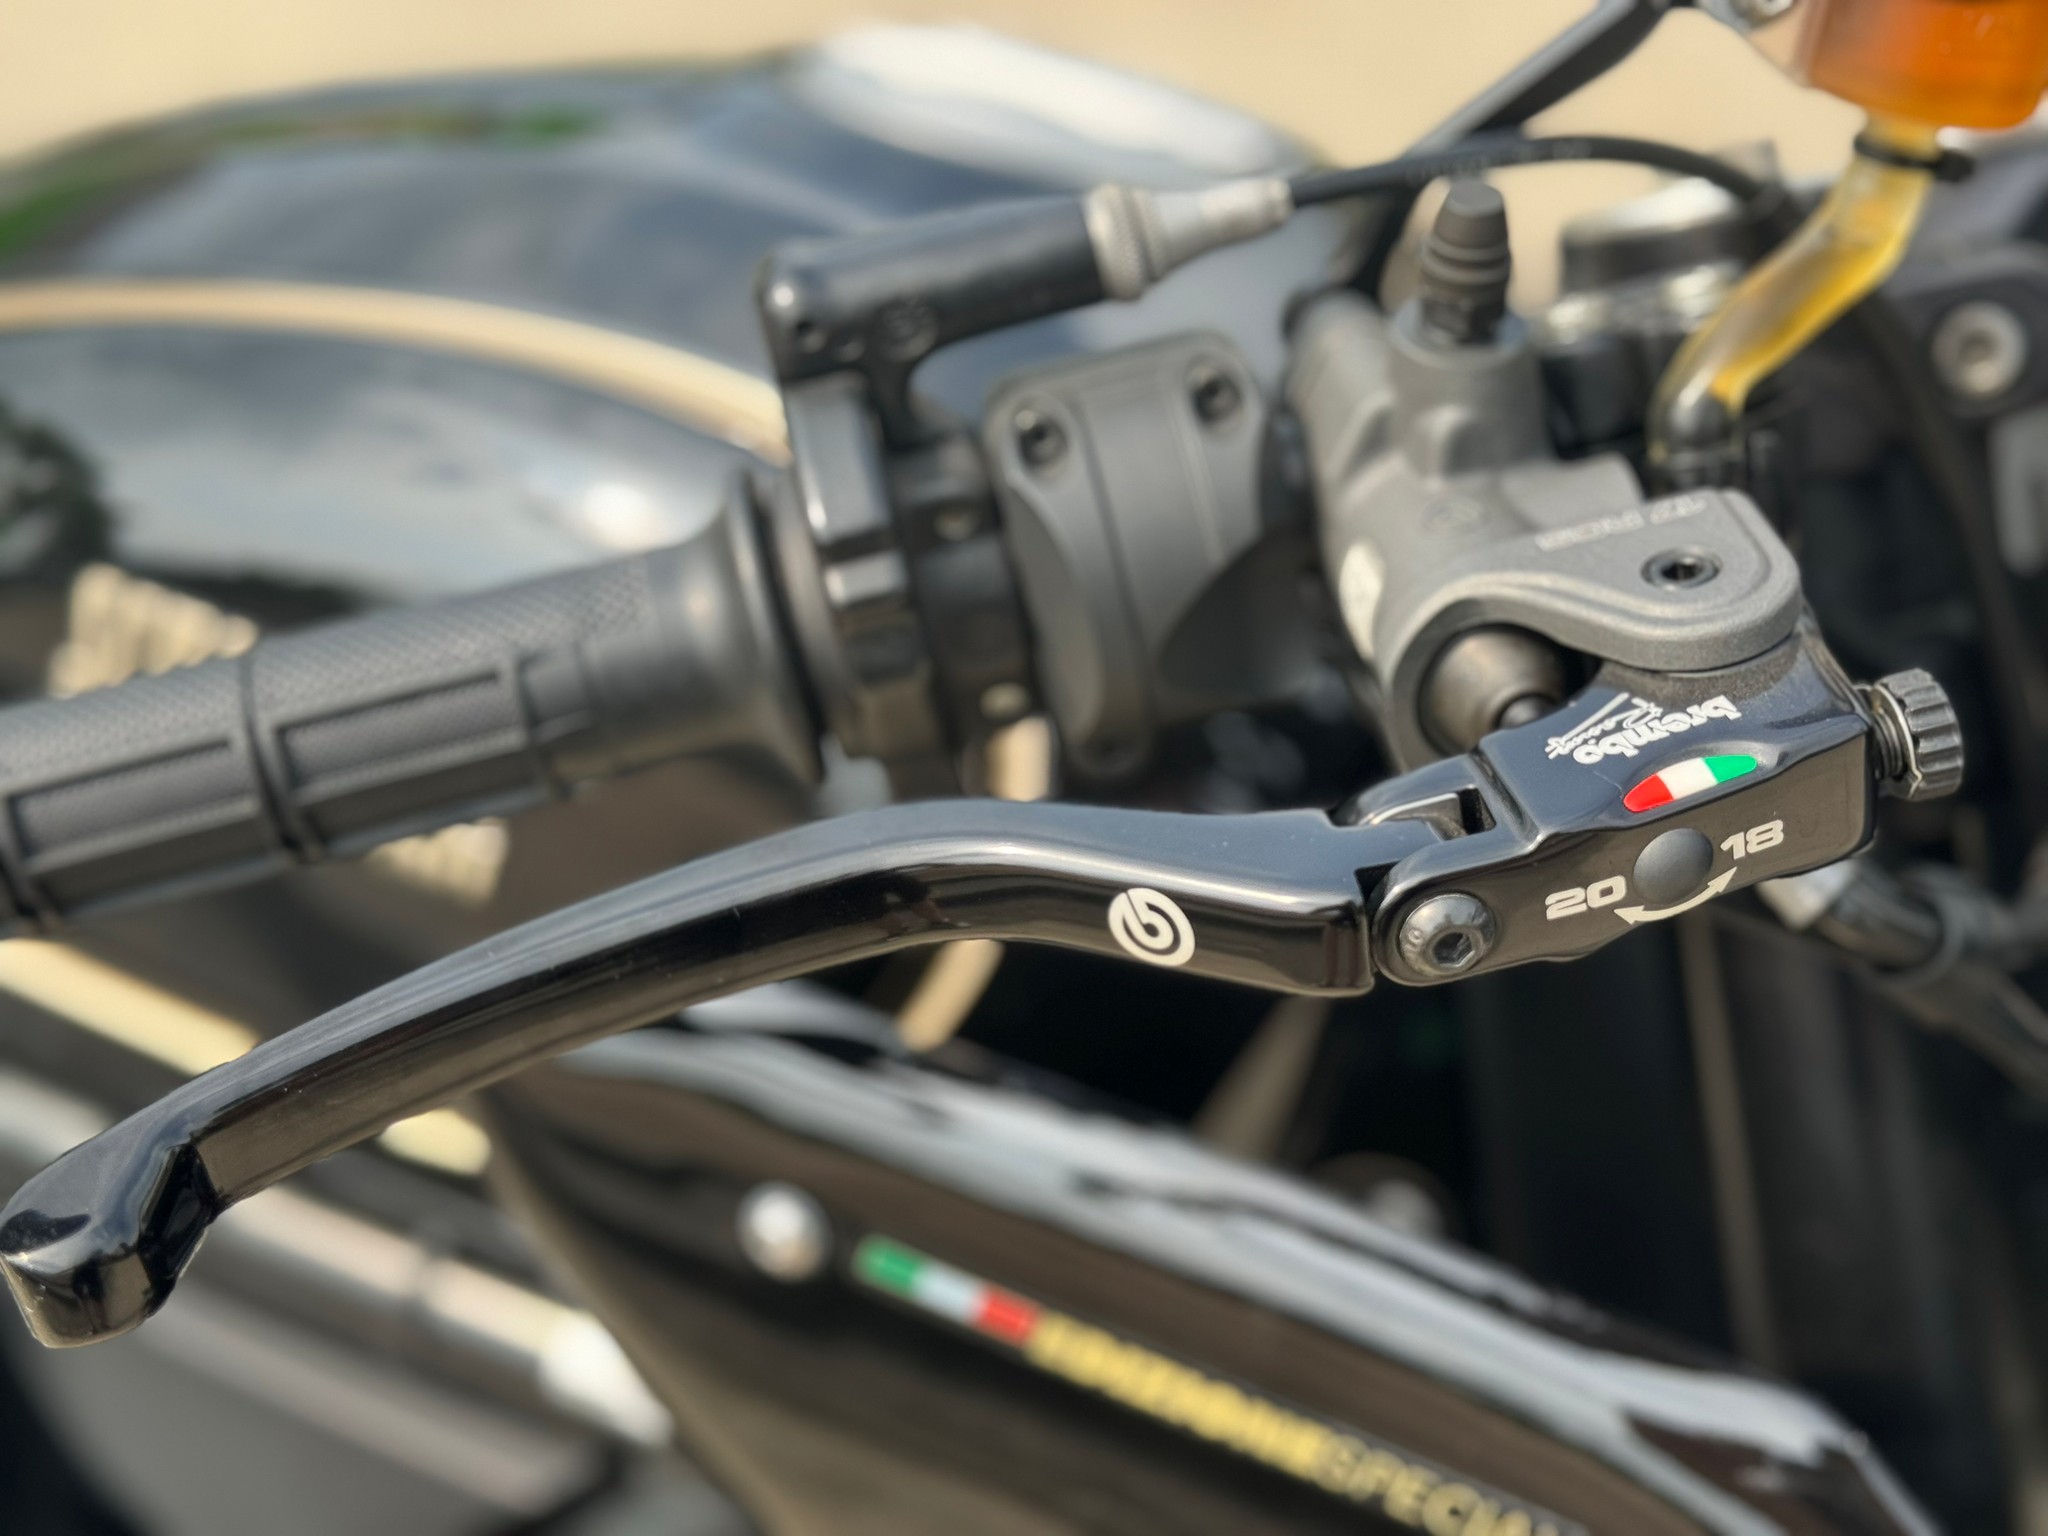 DUCATI SCRAMBLER CAFE RACER - 中古/二手車出售中 Ducati Scrambler Cafe Racer ABS | 德魯伊重機